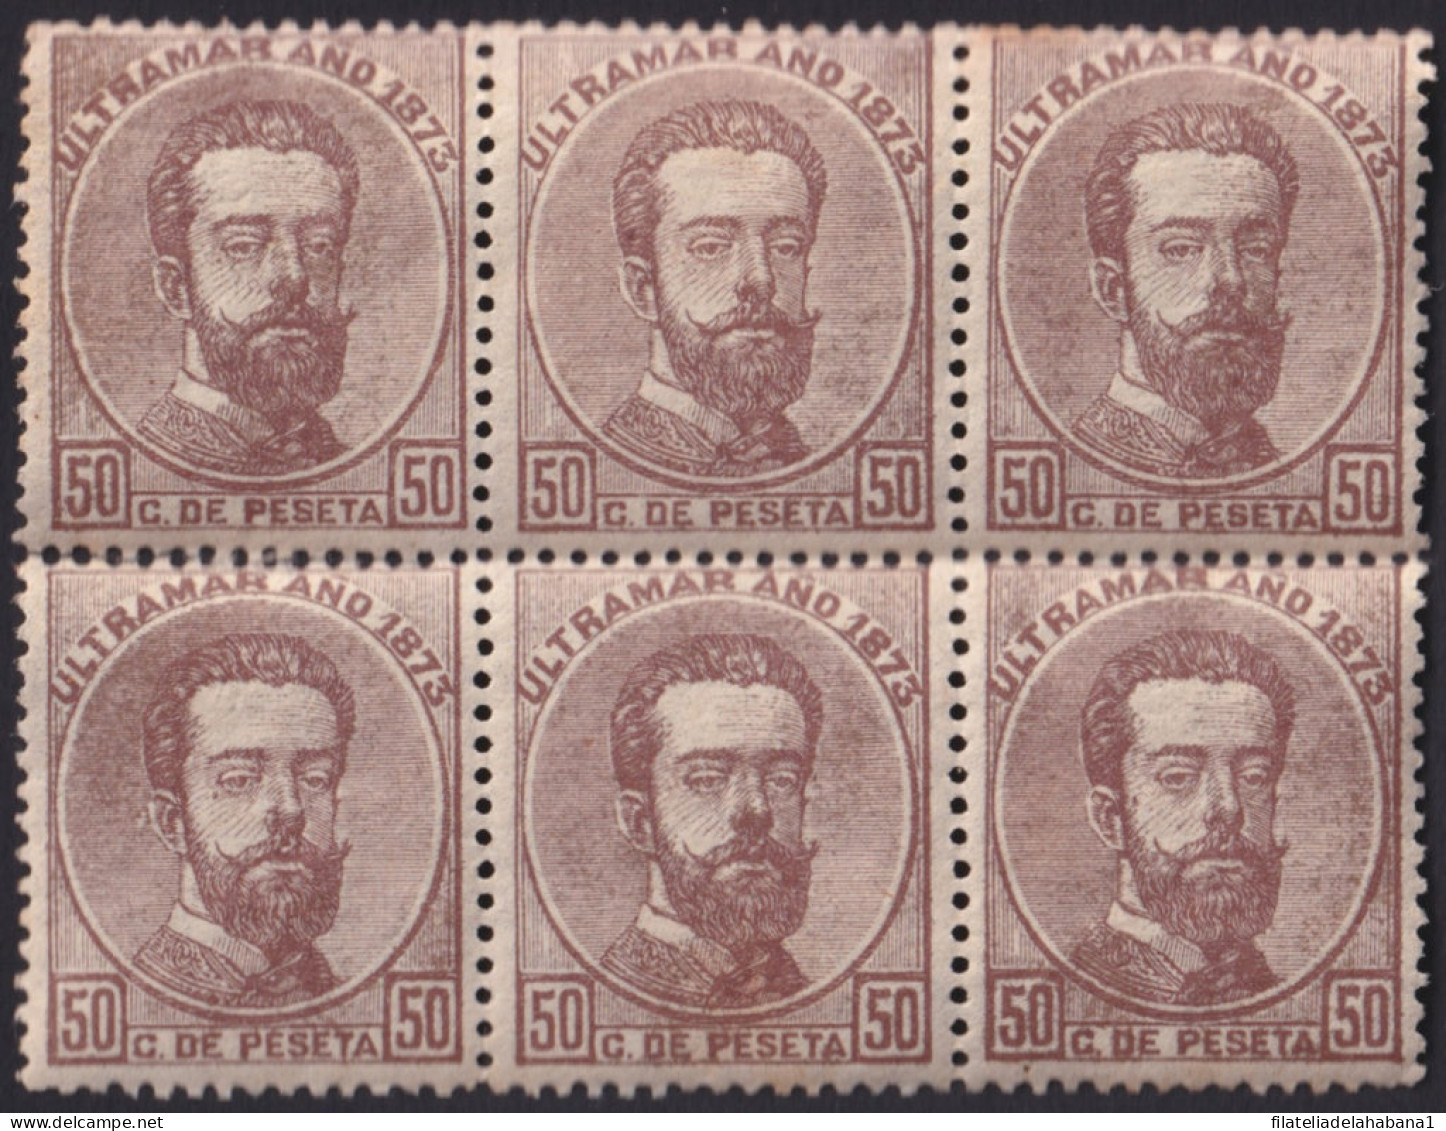 1873-109 CUBA ANTILLAS ESPAÑA SPAIN 1873 50c AMADEO I FINE PAPER CALCADO A REVERSO. - Prephilately